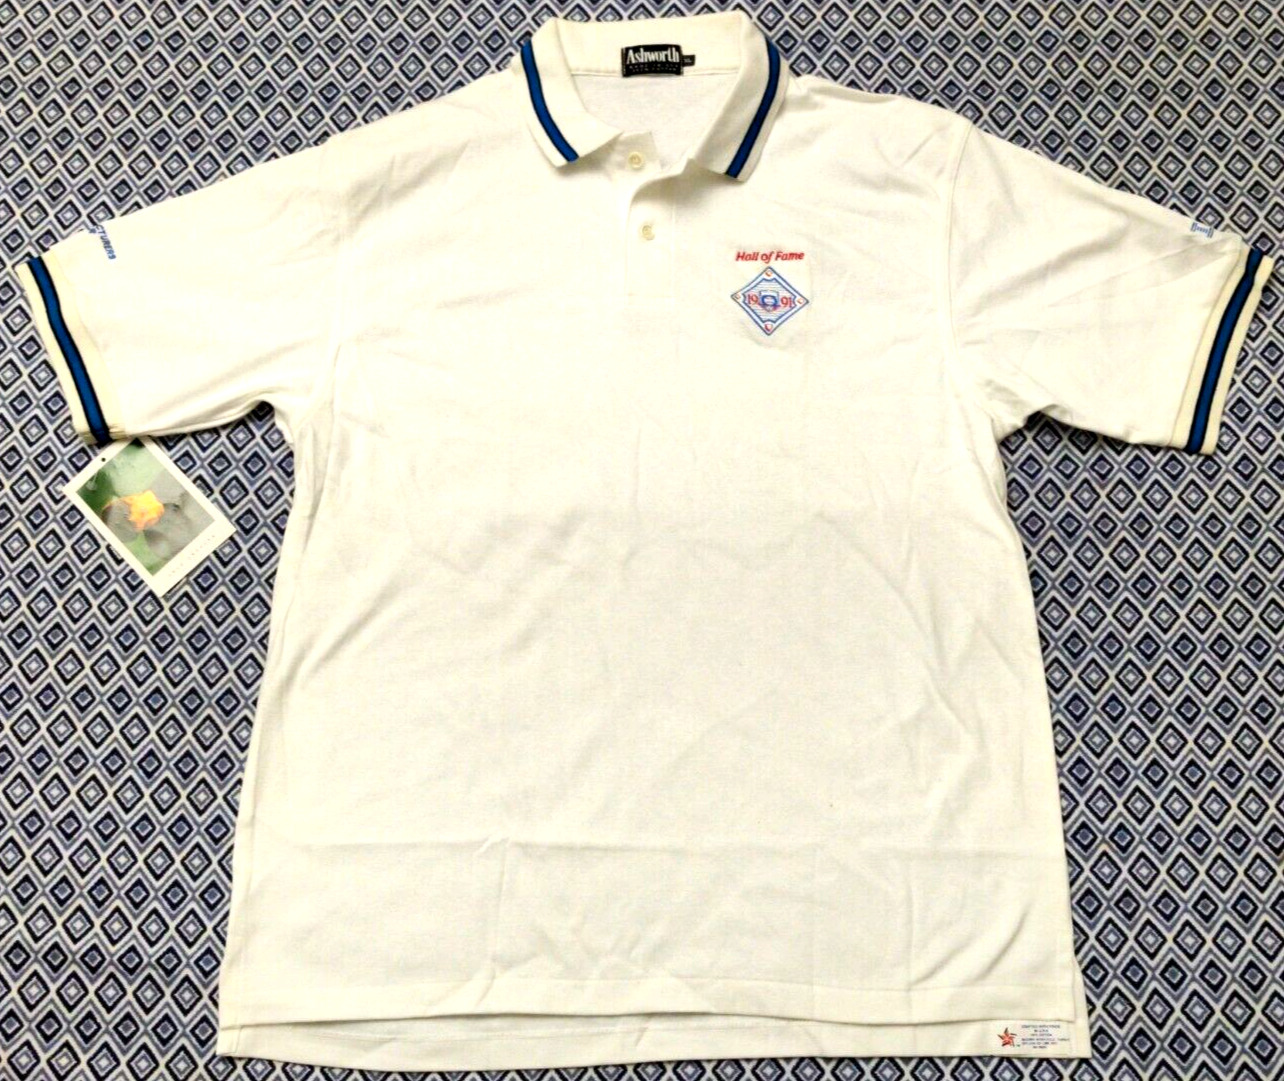 Vtg NEW Ashworth polo shirt  1991 Hall of Fame Size XL  IBM Manufactures Hanover